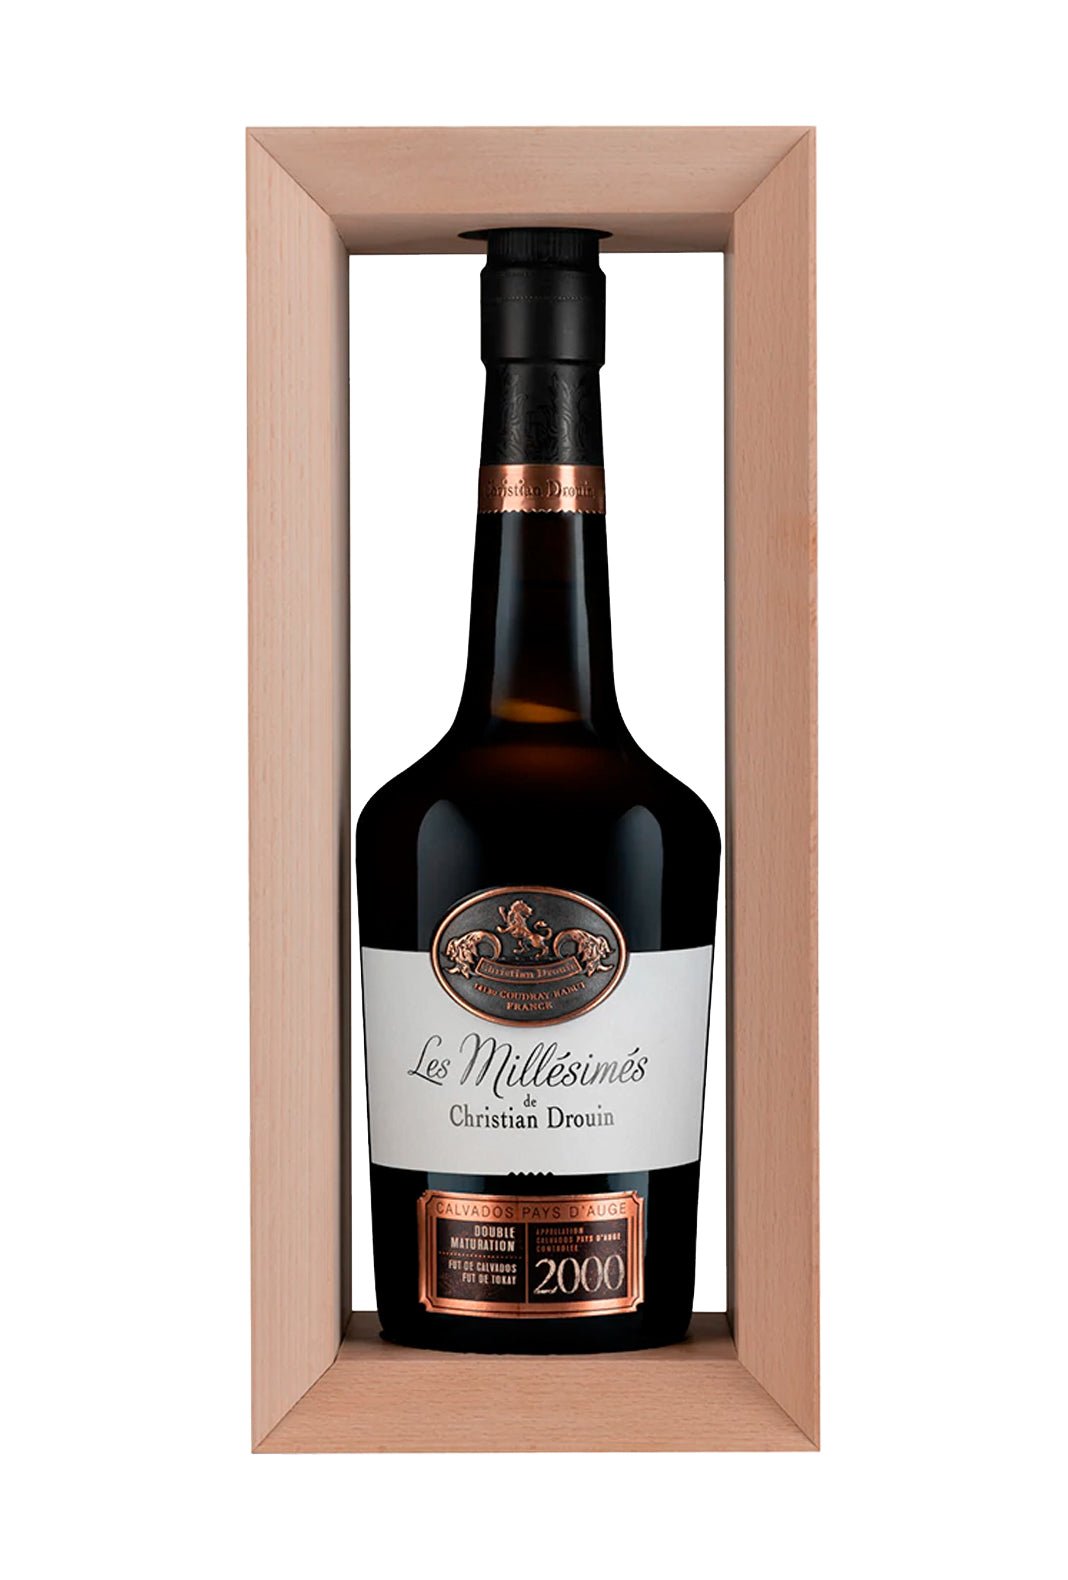 Christian Drouin Calvados Vintage 2000 42% 700ml | Brandy | Shop online at Spirits of France